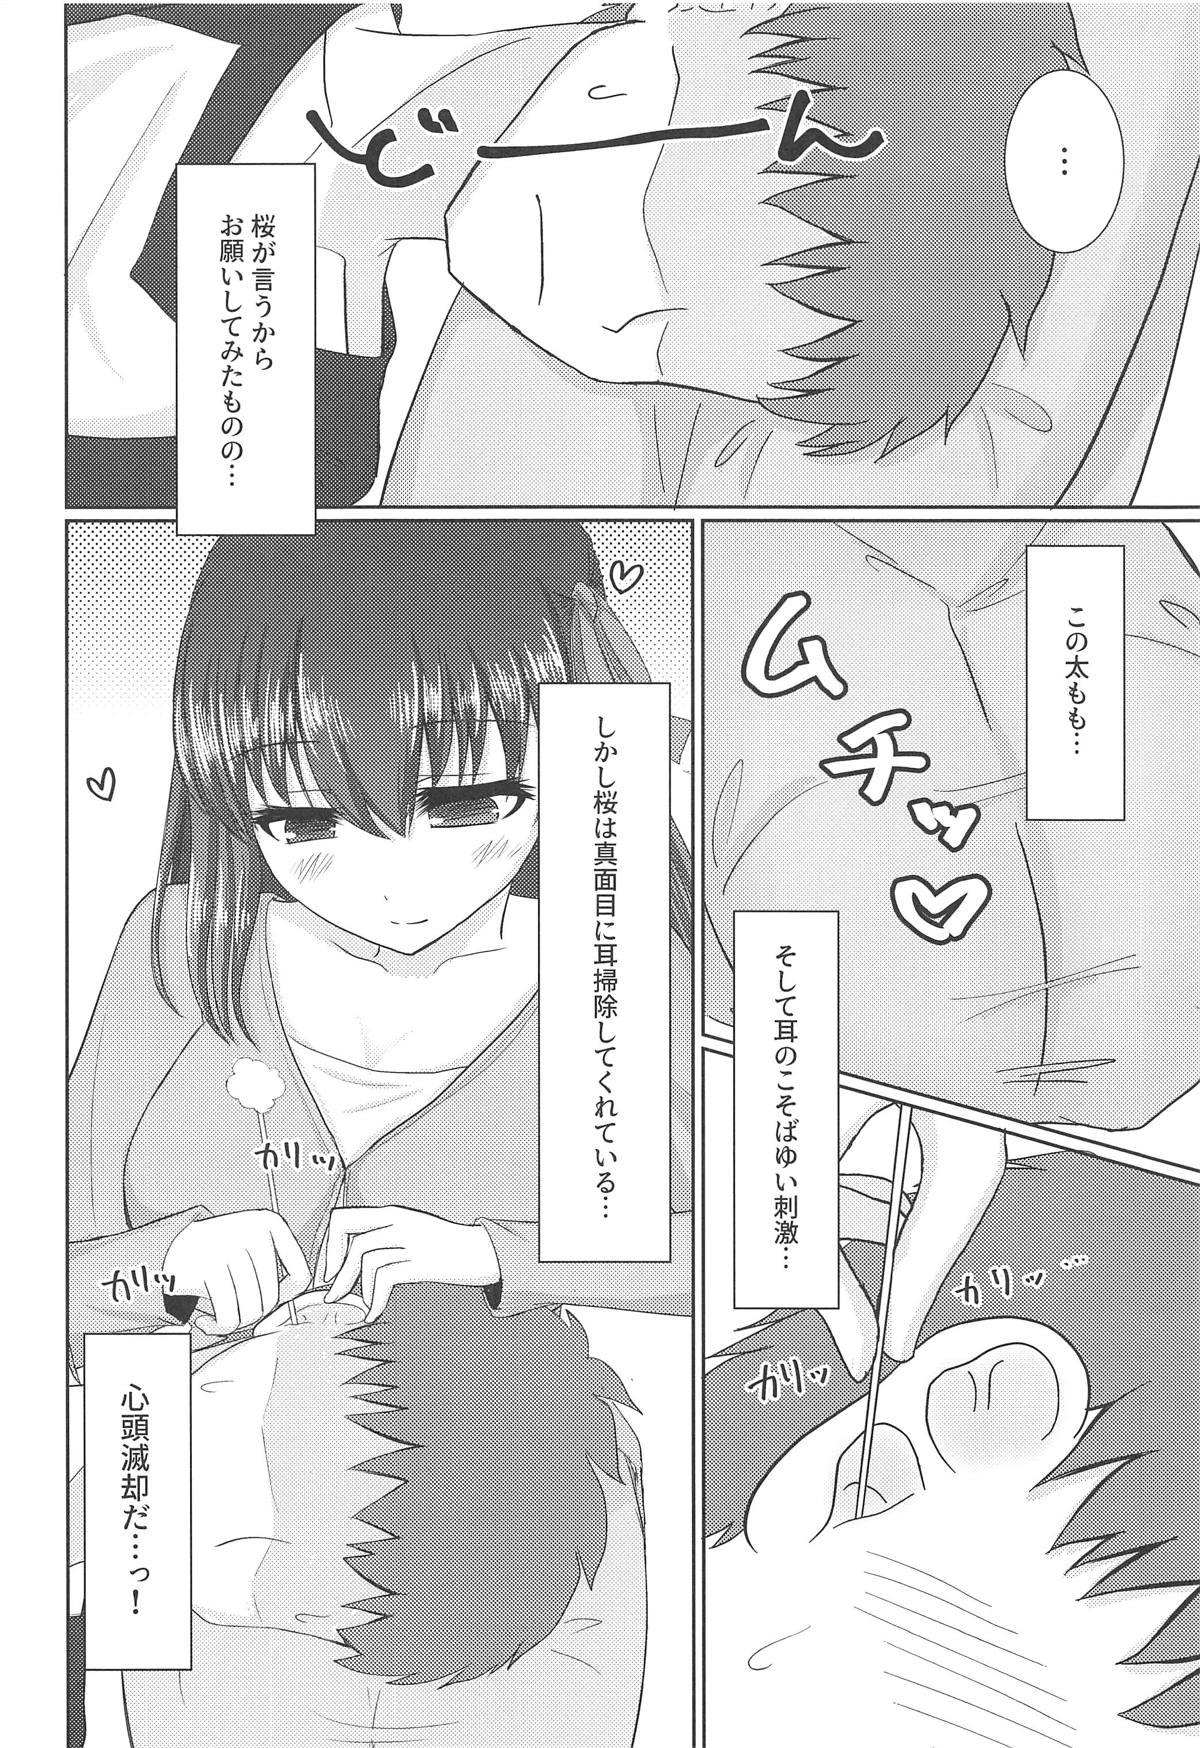 Sola Hiza no Ue ni Sakura - Fate stay night Camsex - Page 5